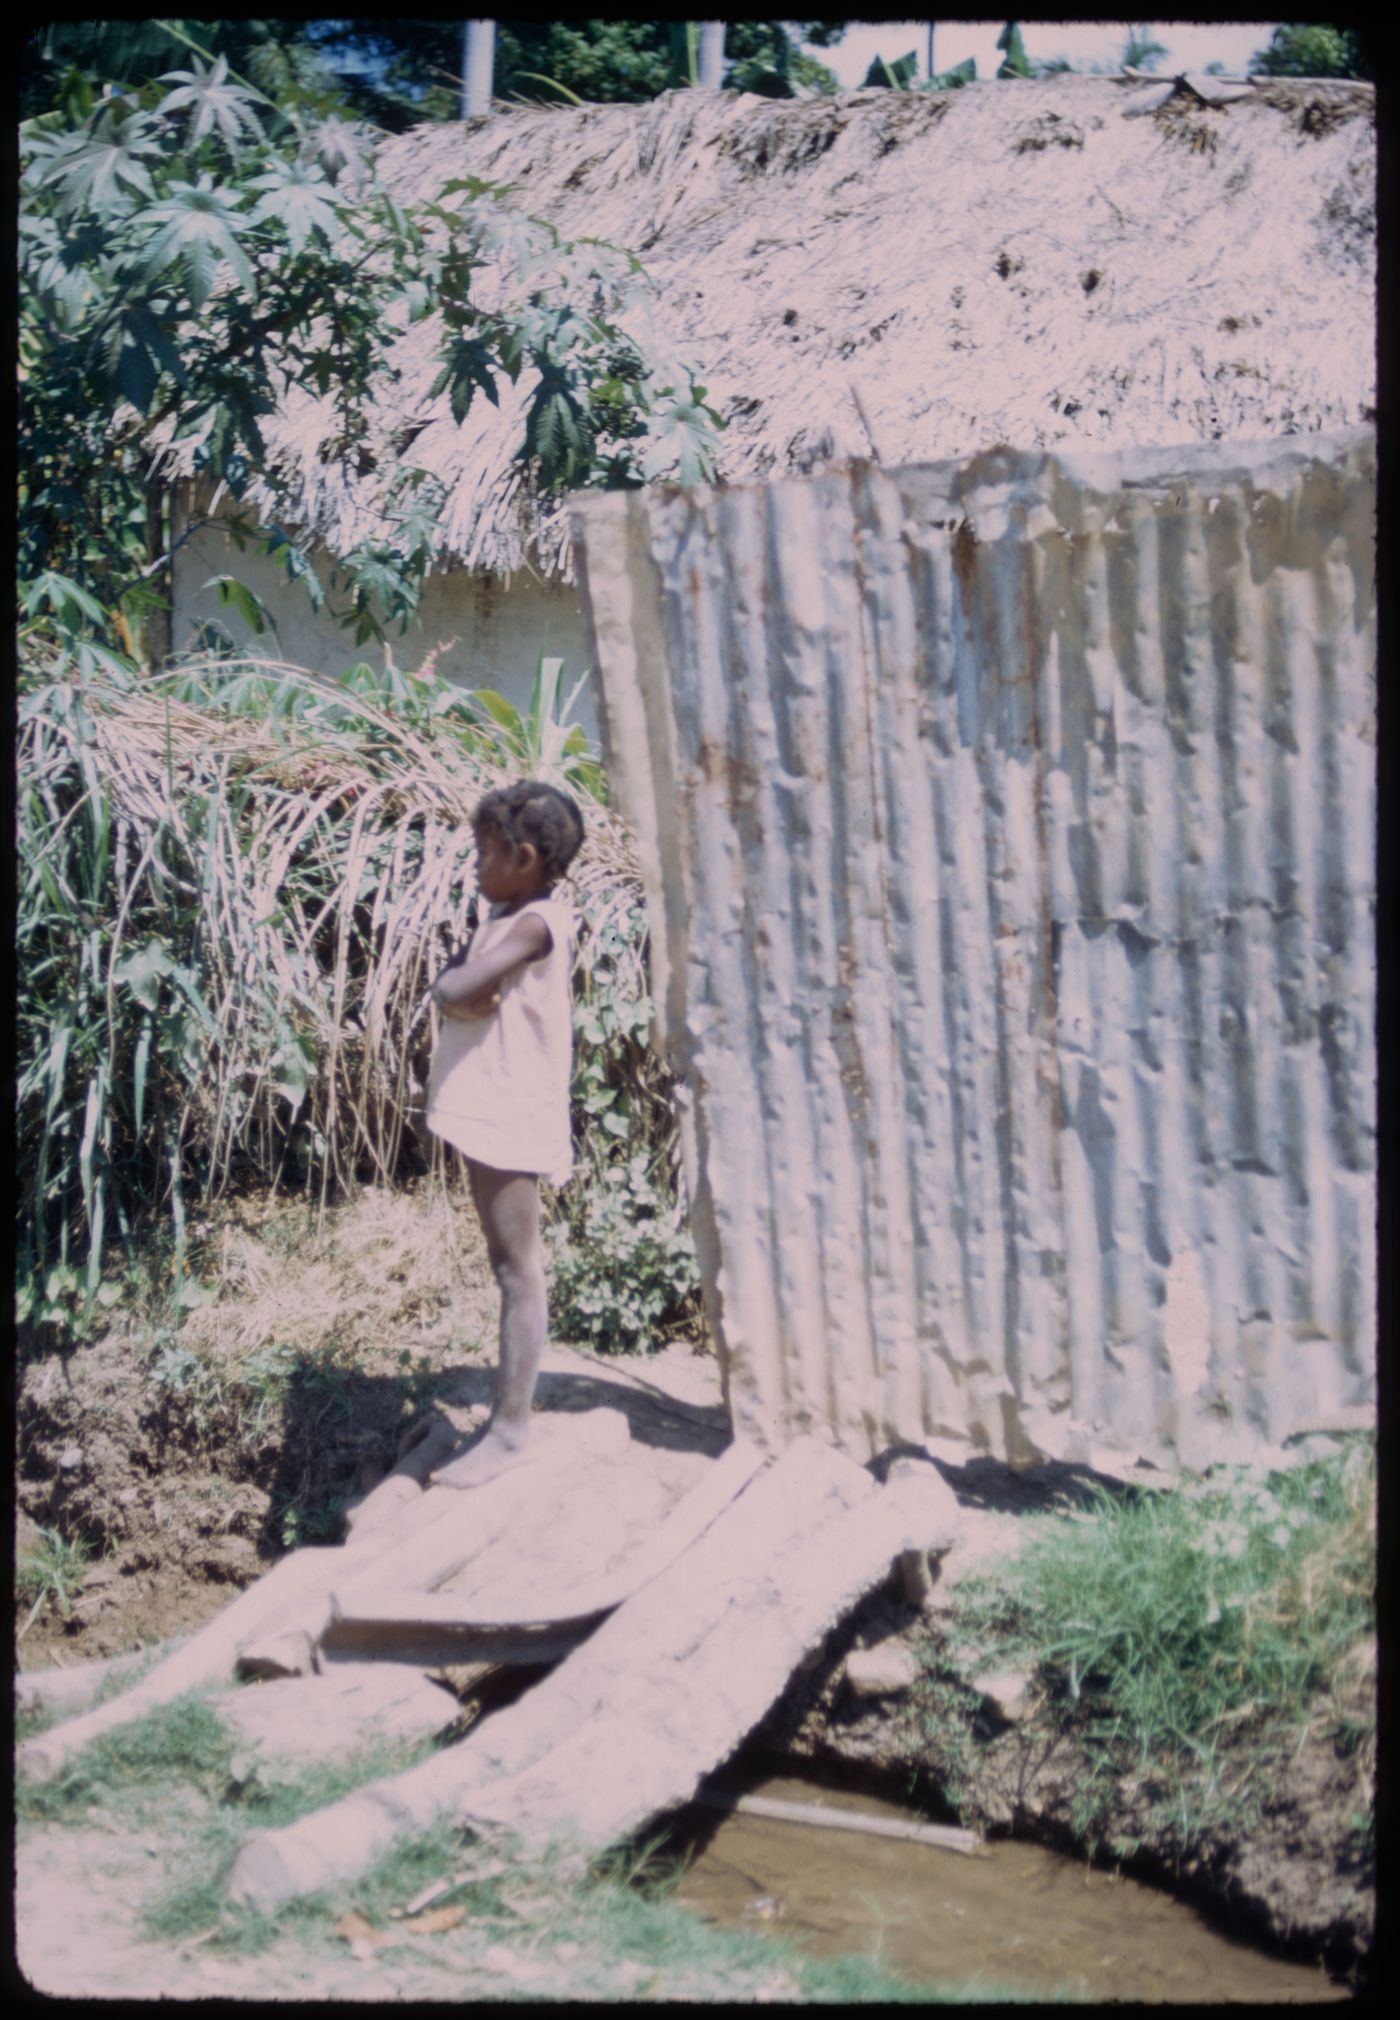 Child, Haiti